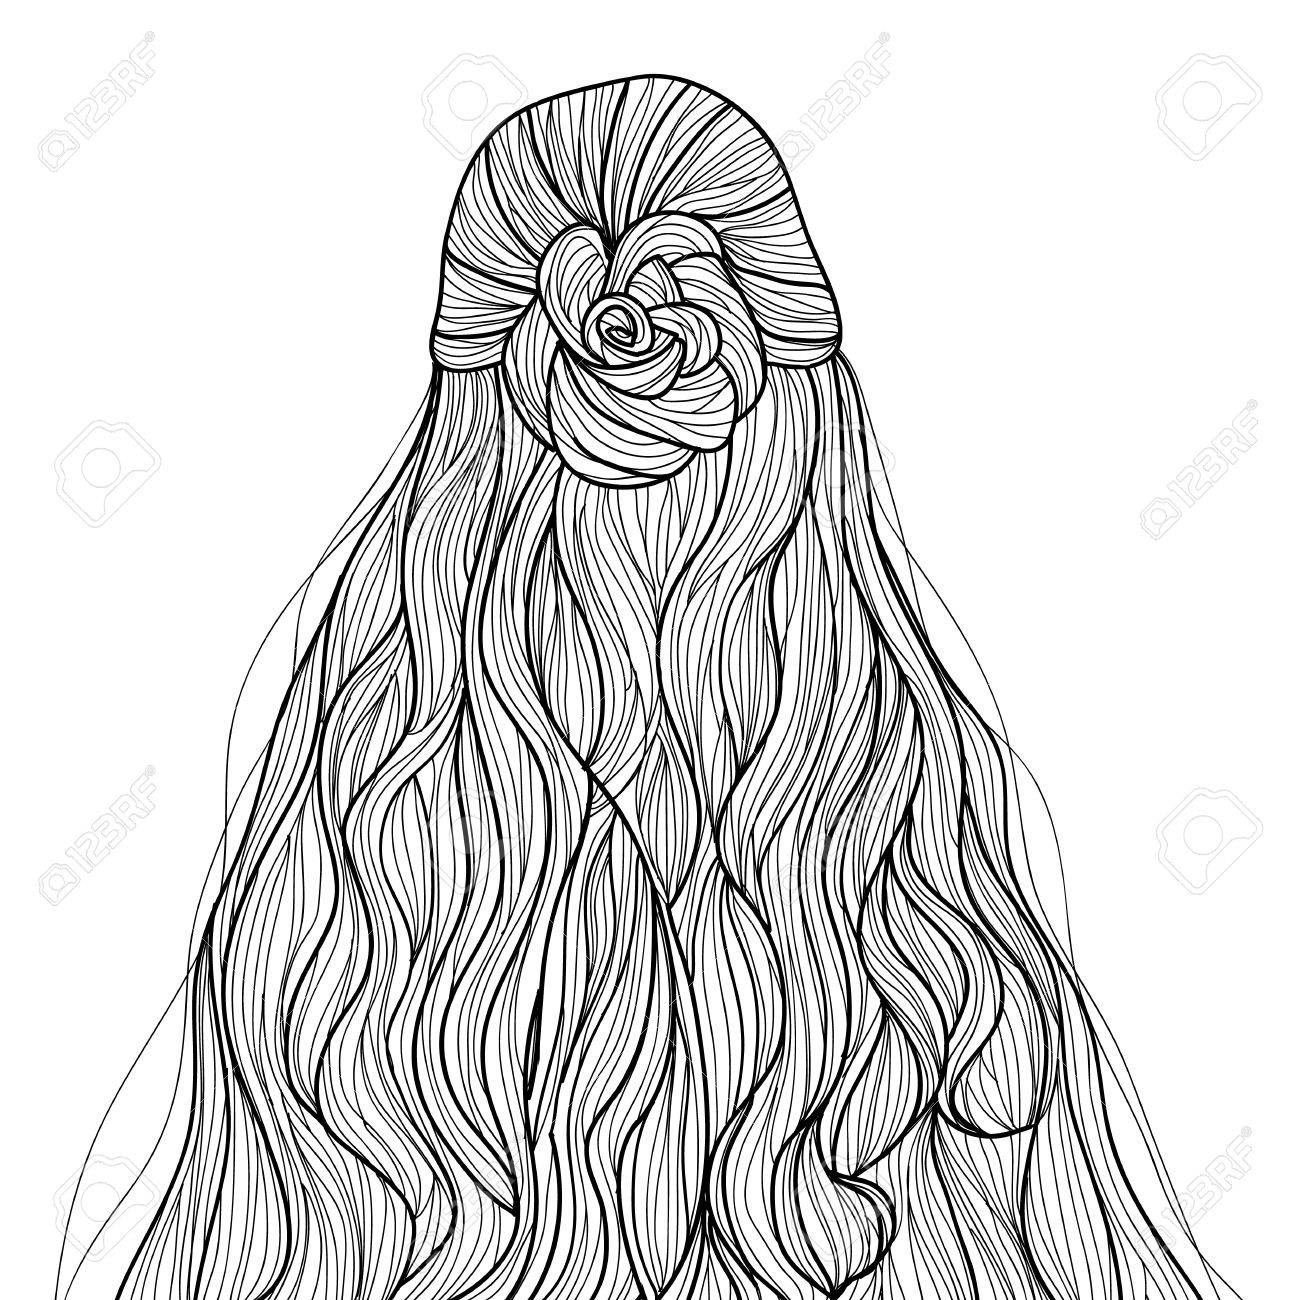 braided-hair-drawing-at-getdrawings-free-download